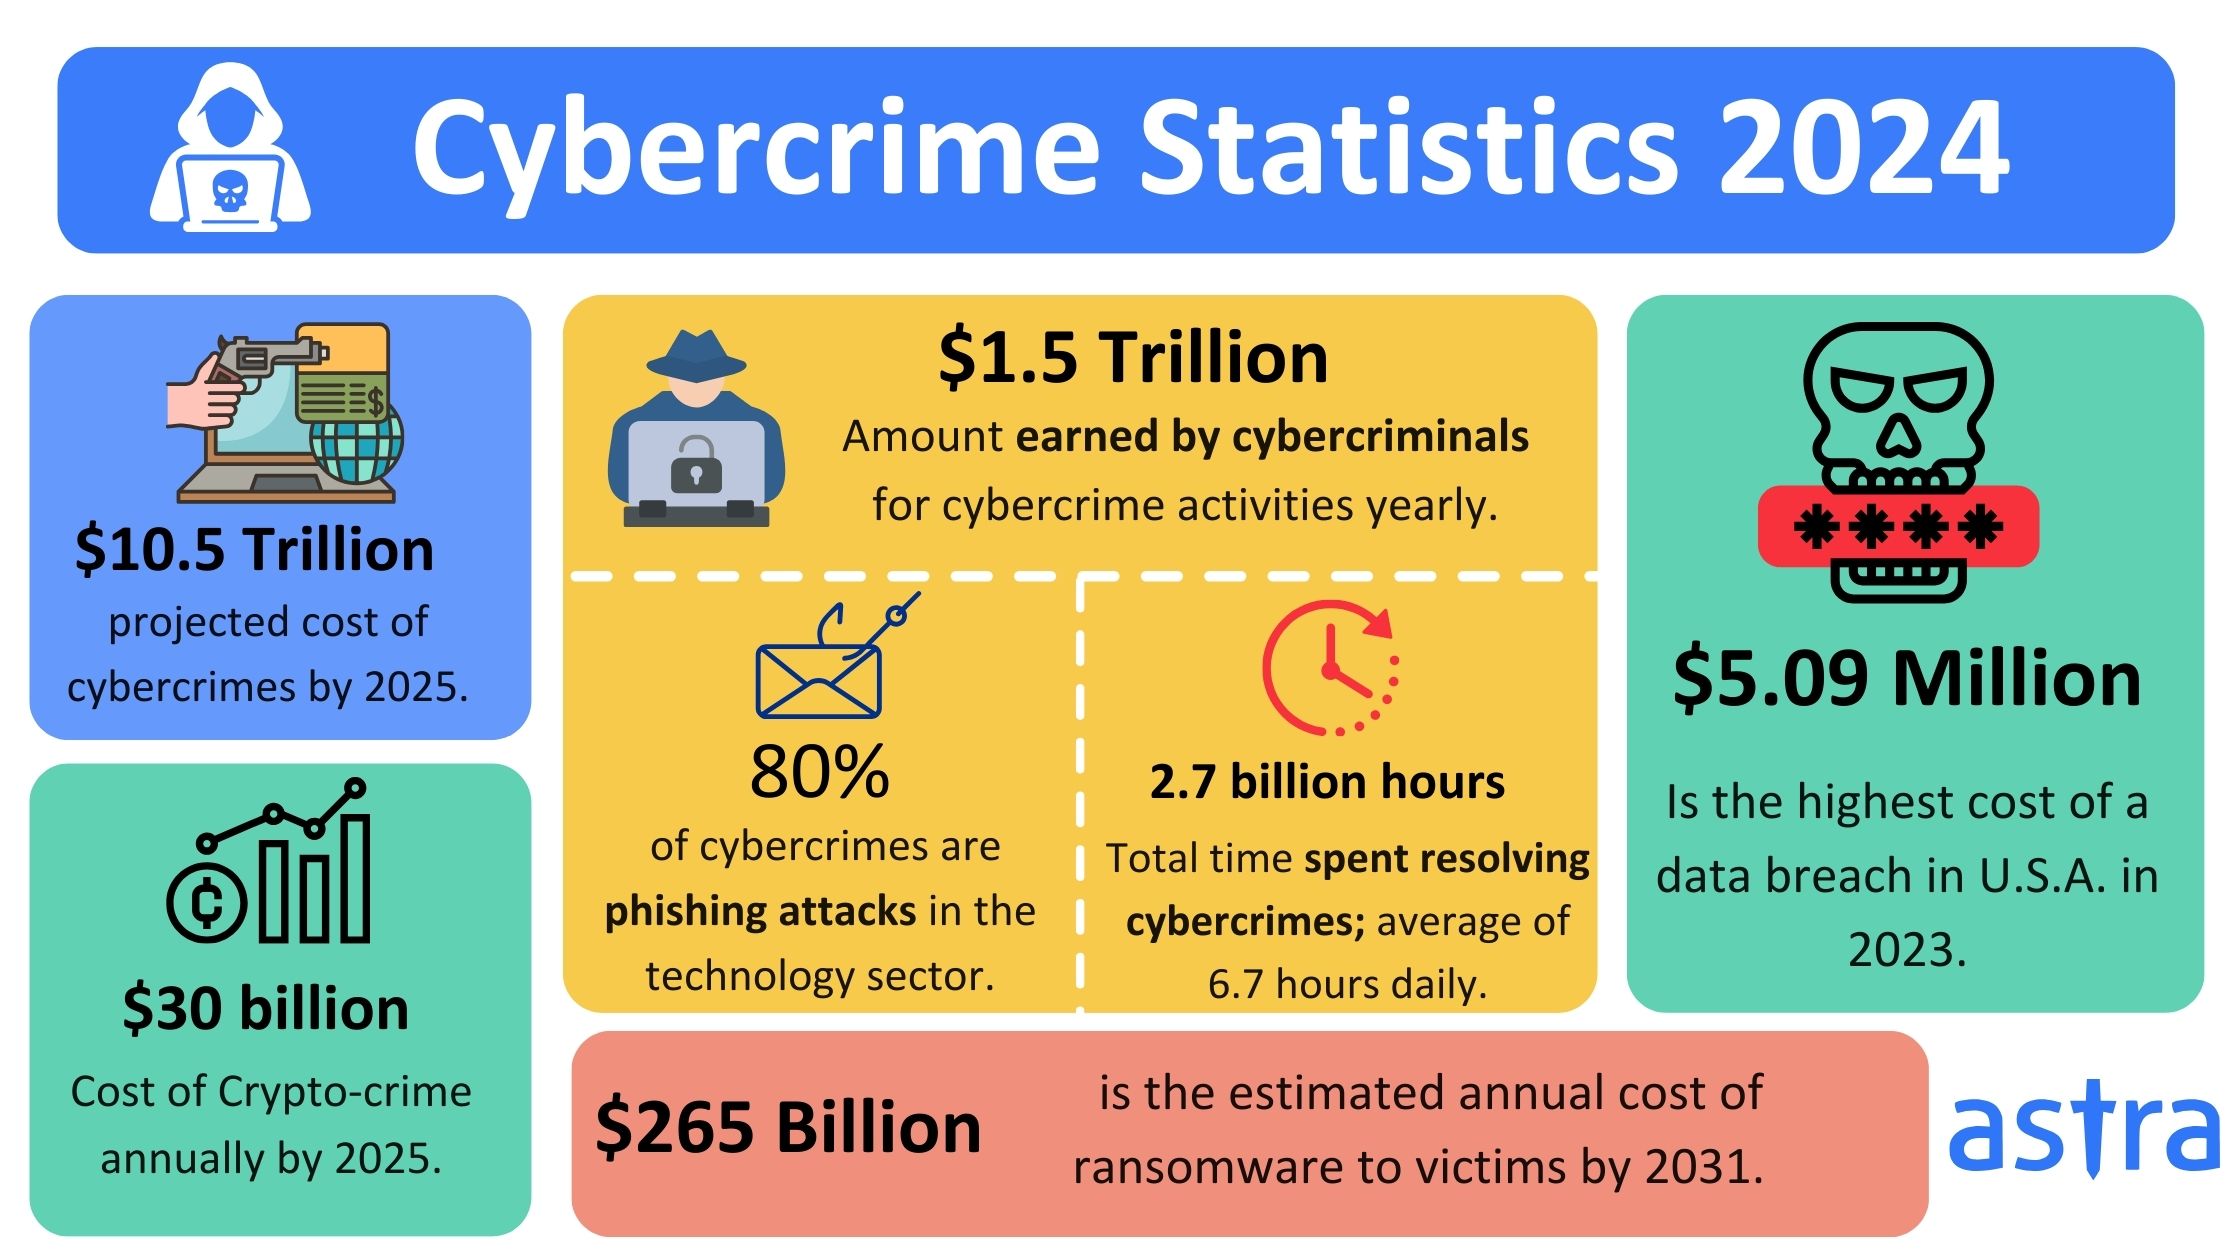 Cybercrime Statistics 2024 infographic